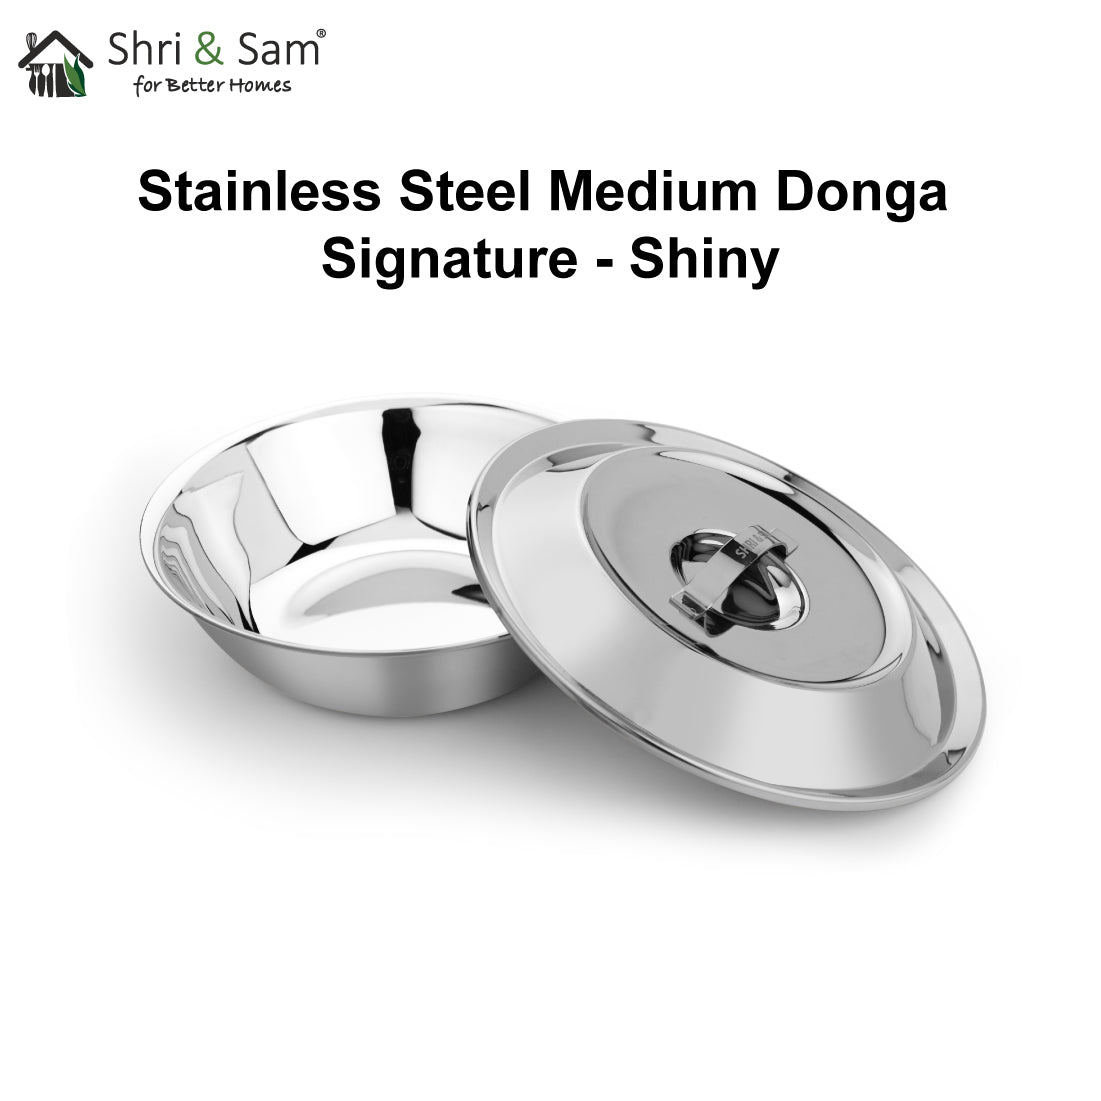 Stainless Steel Medium Donga Signature - Shiny